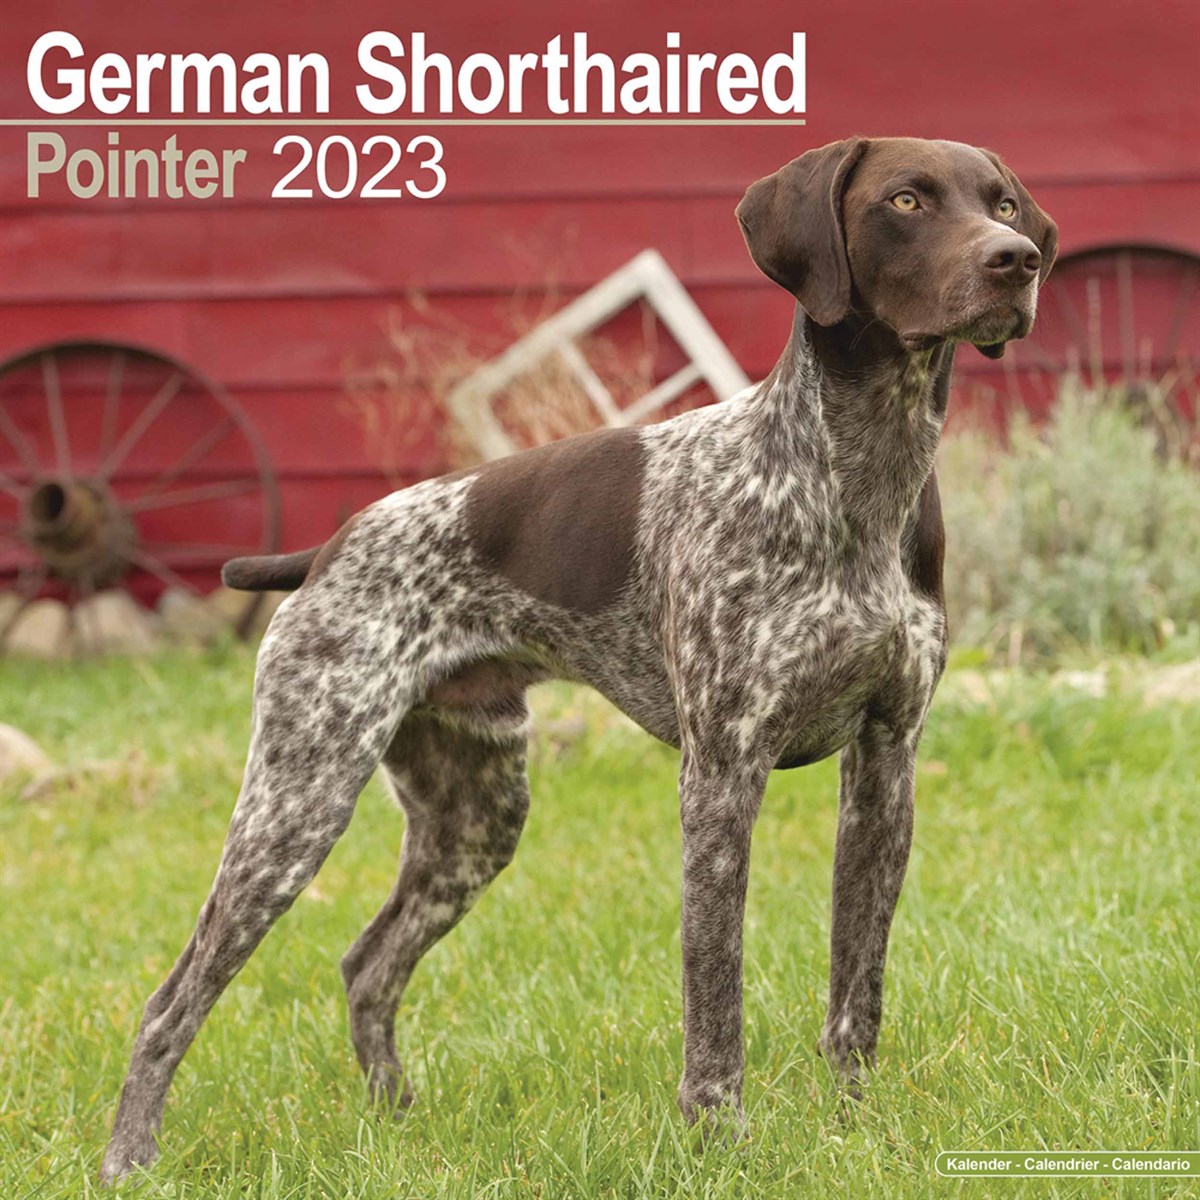 German Shorthaired Pointer 2023 Calendars